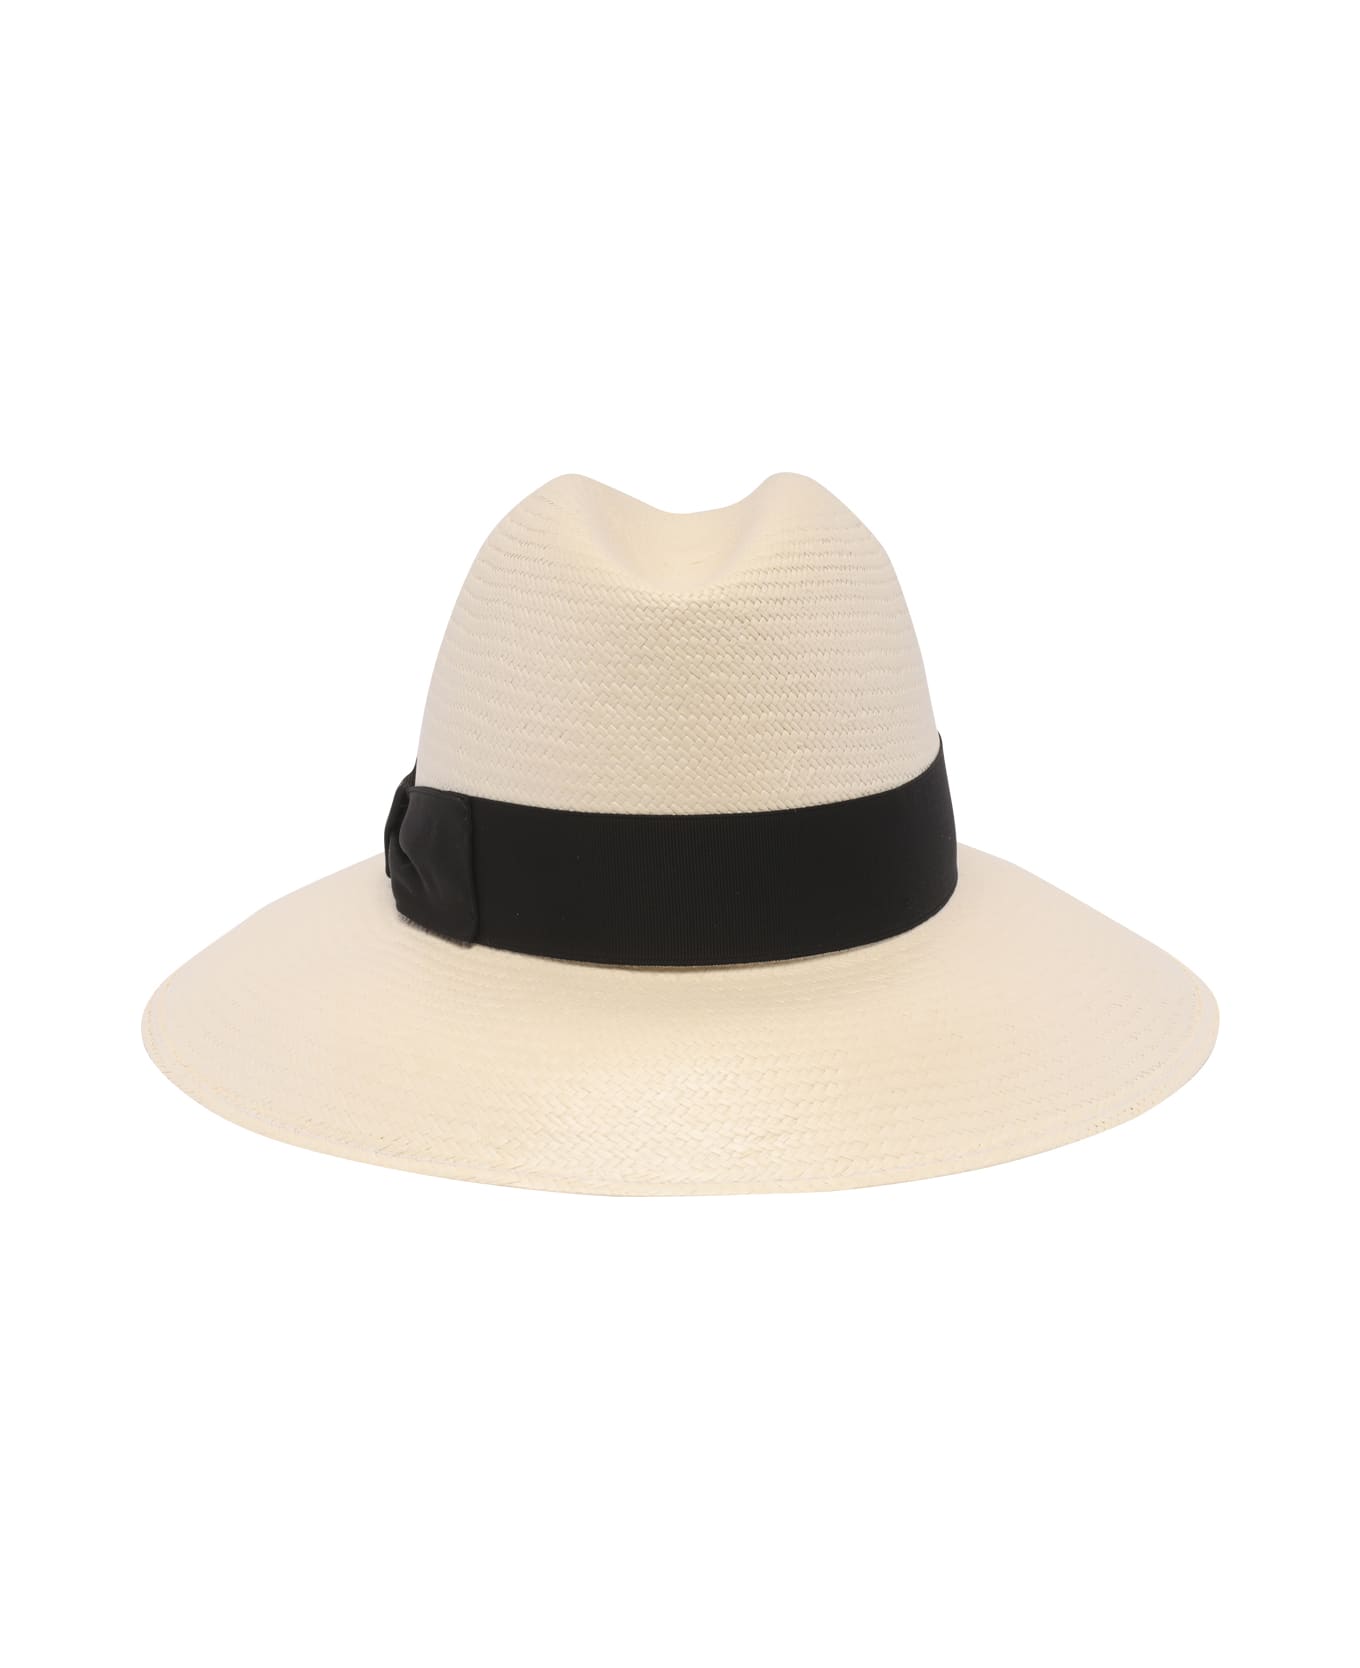 Borsalino Claudette Panama Hat - Black